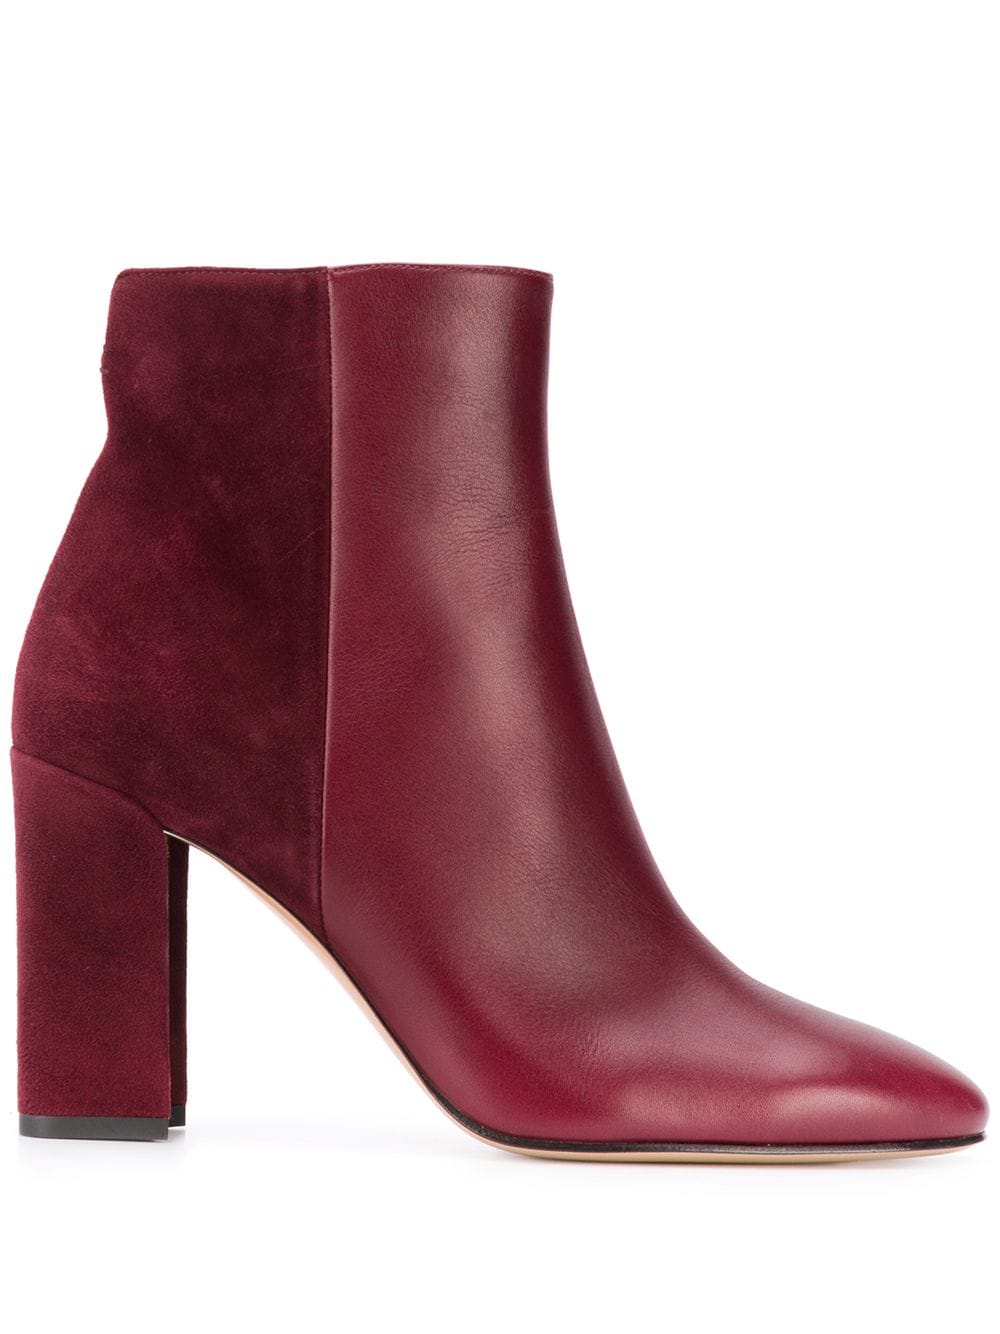 burgundy short boots